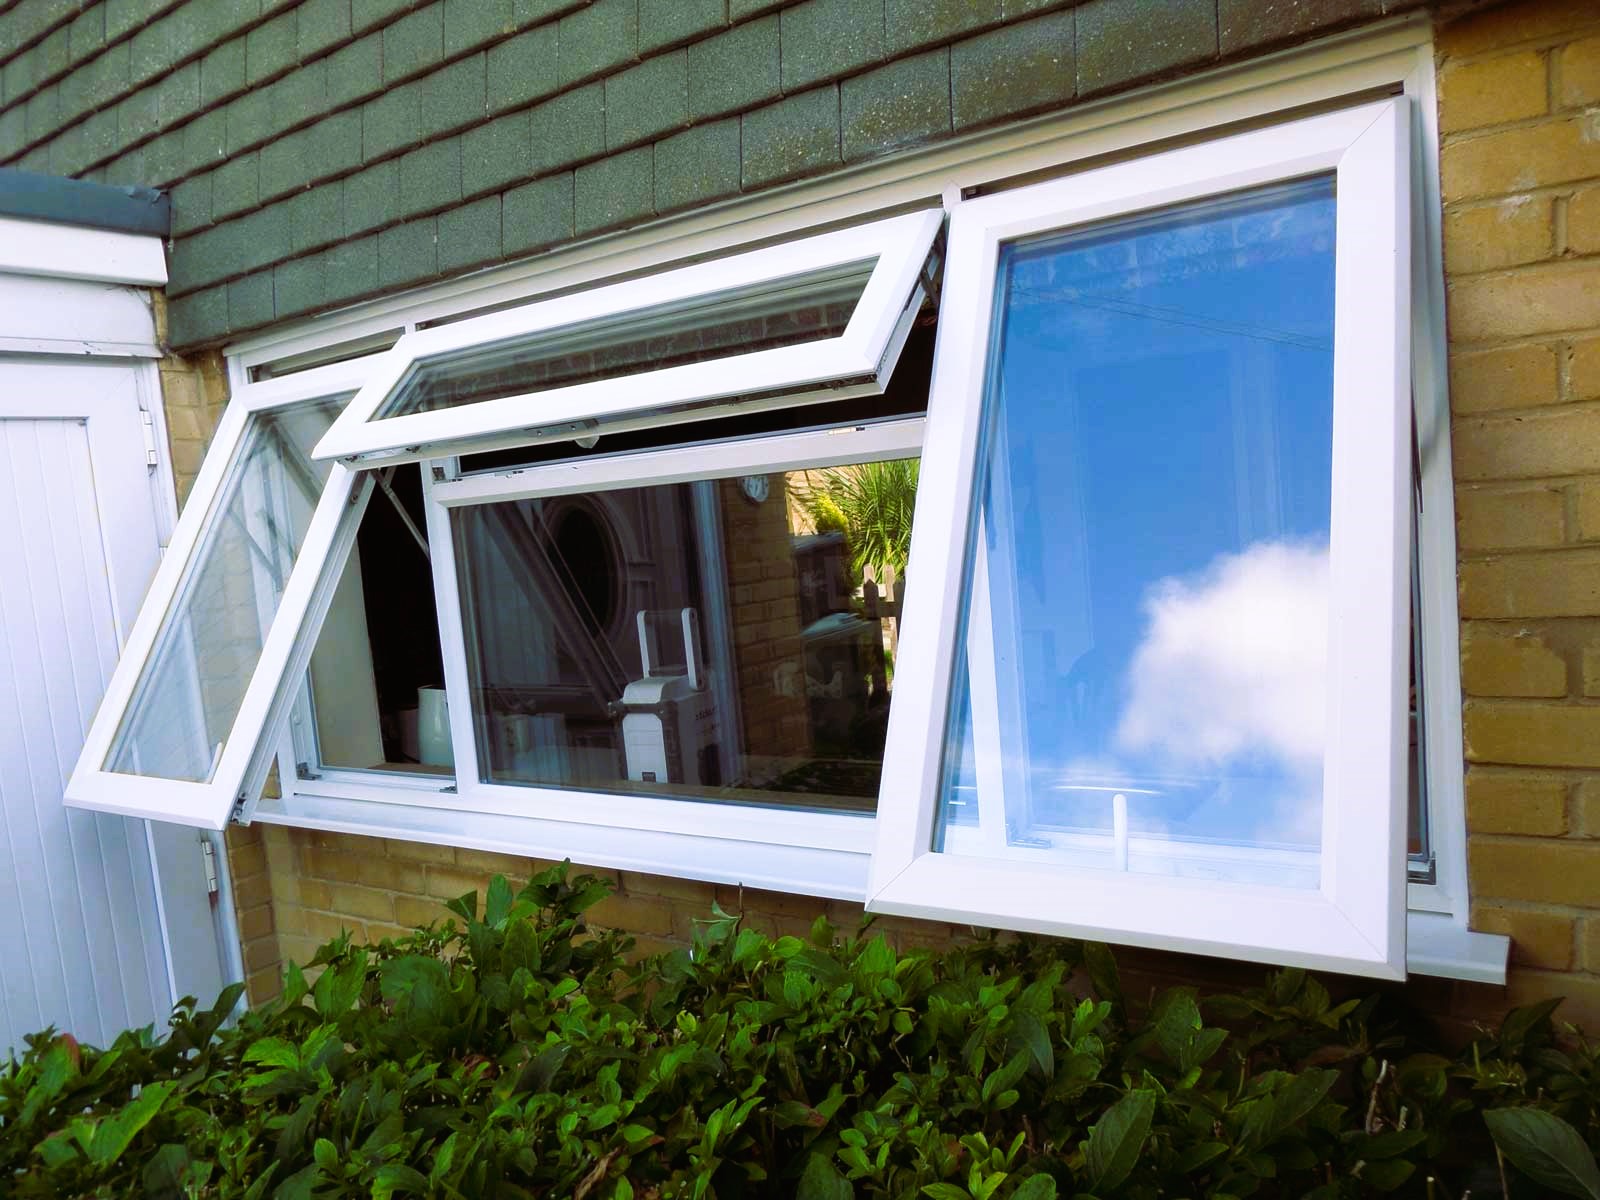 Double Glazed Windows for Insulation